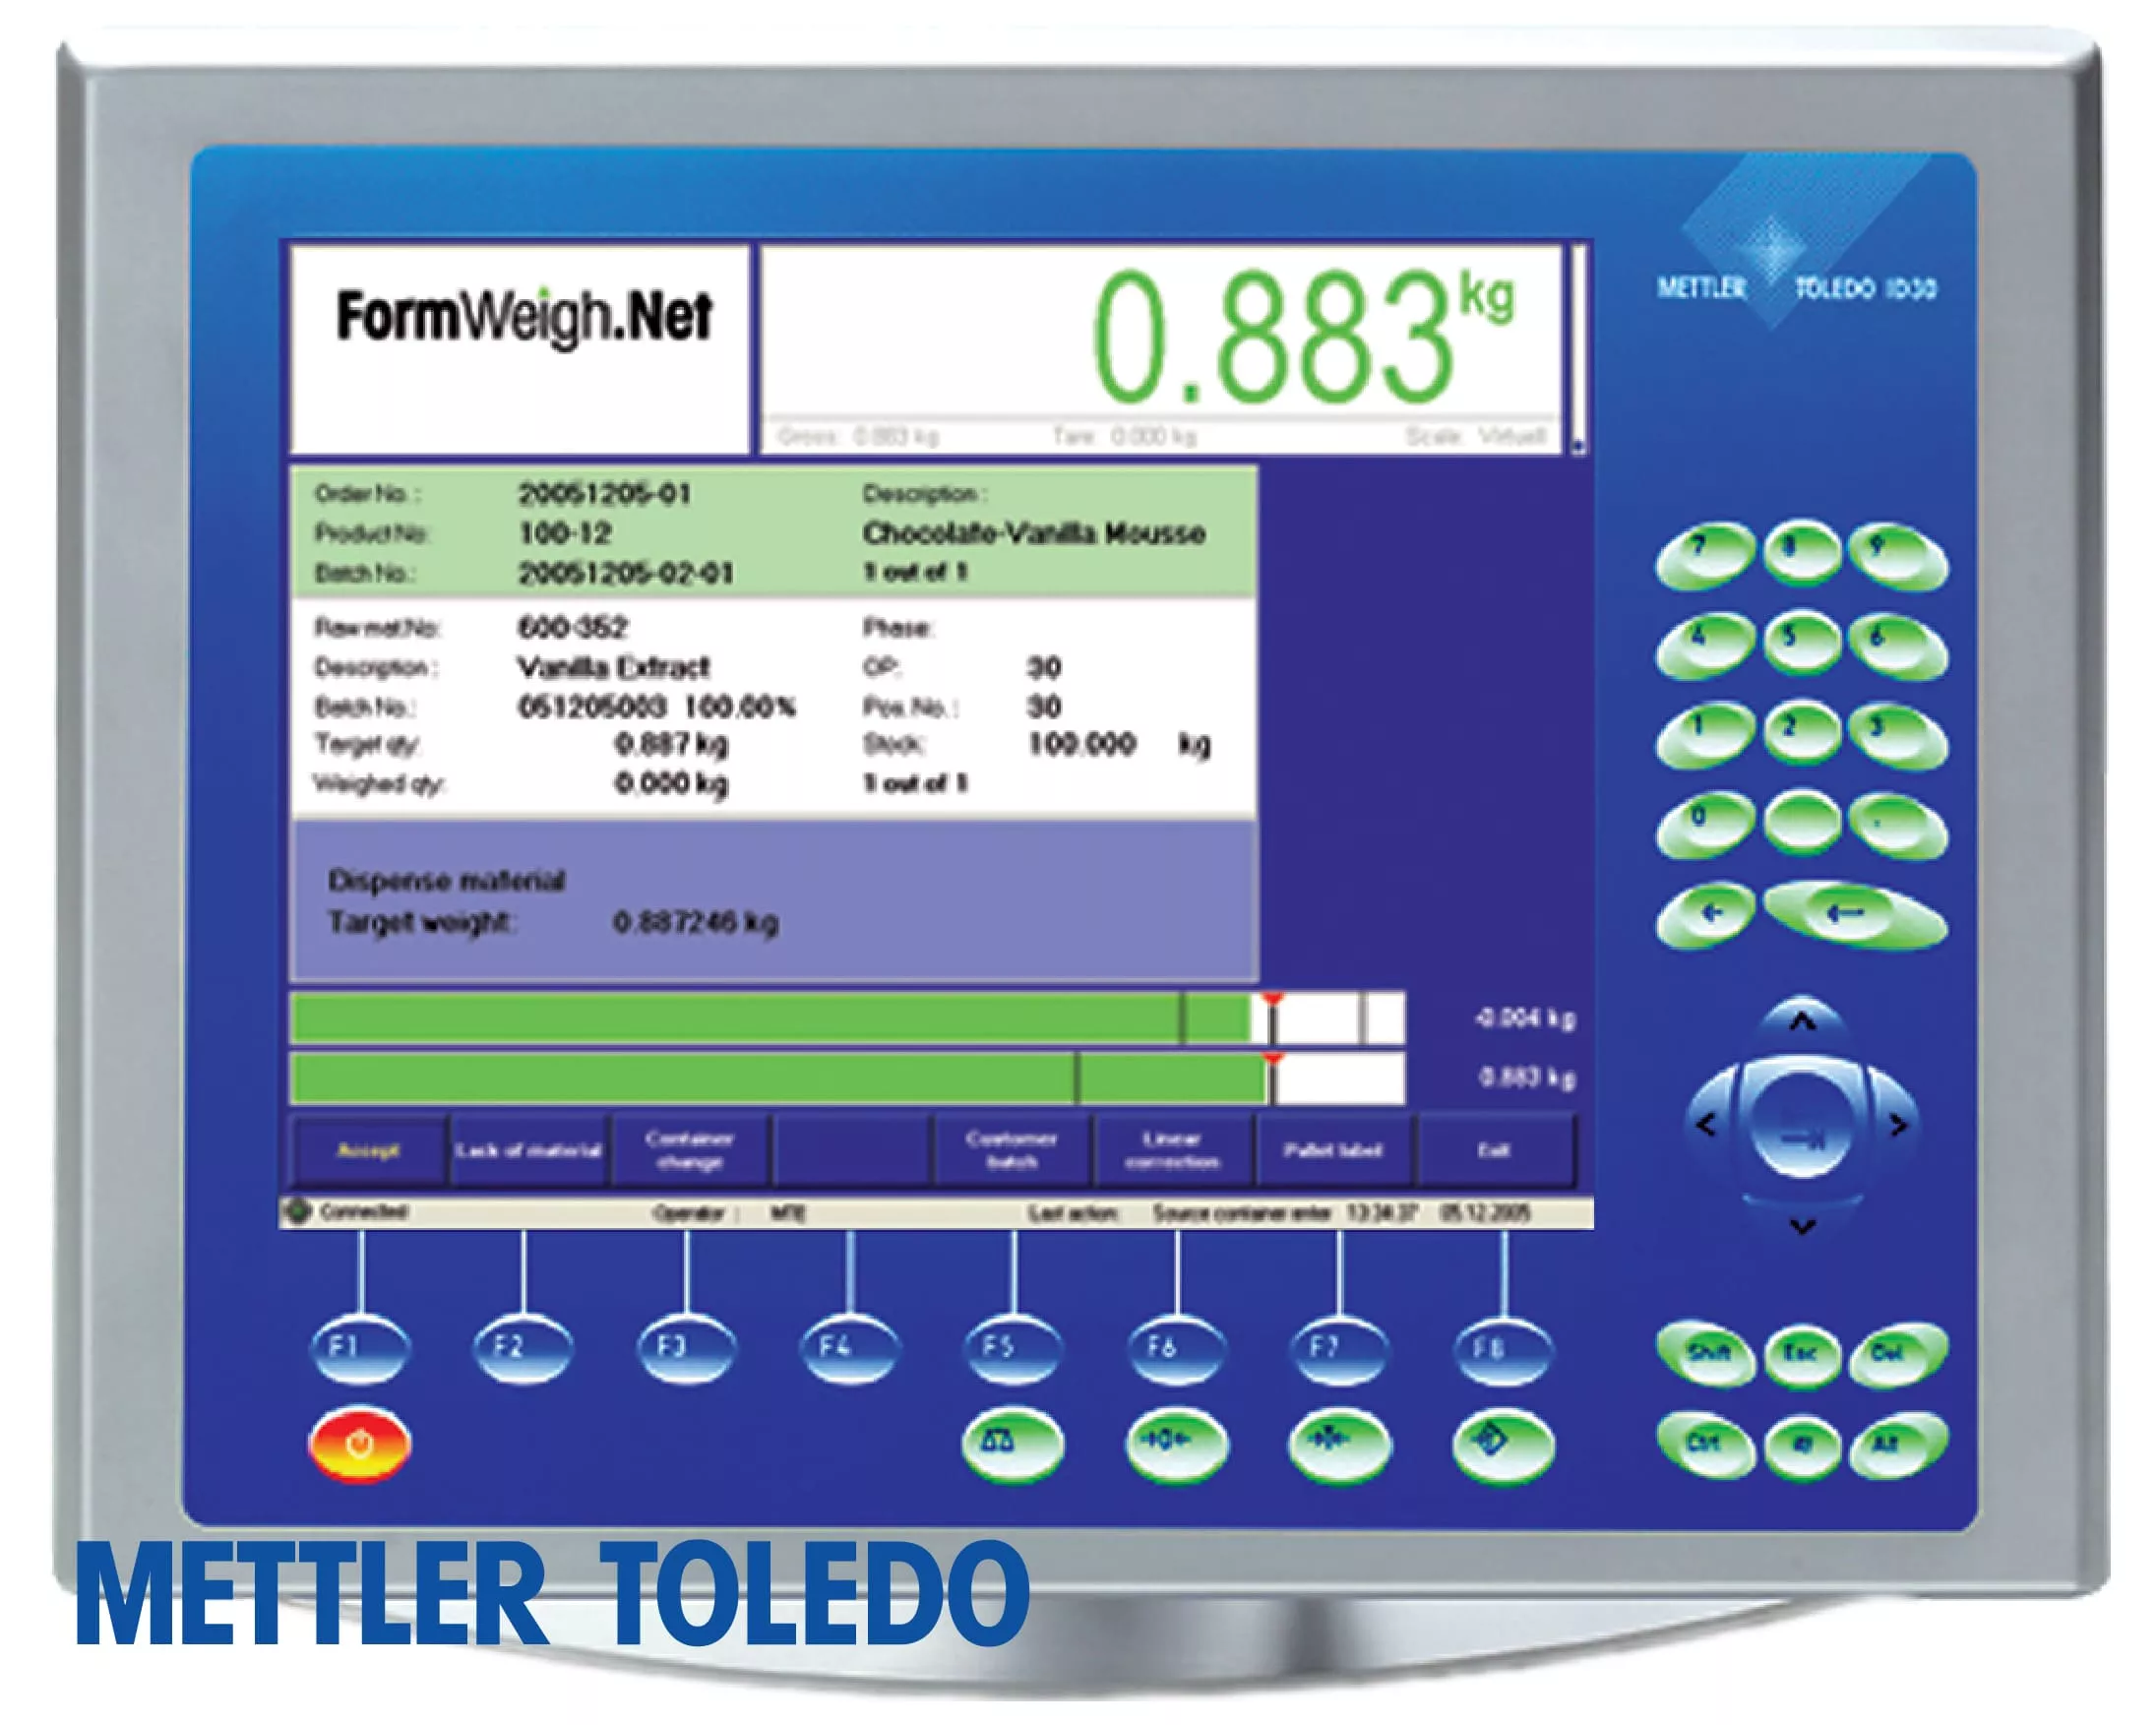 Mettler Toledo FormWeigh.Net Formulation Software